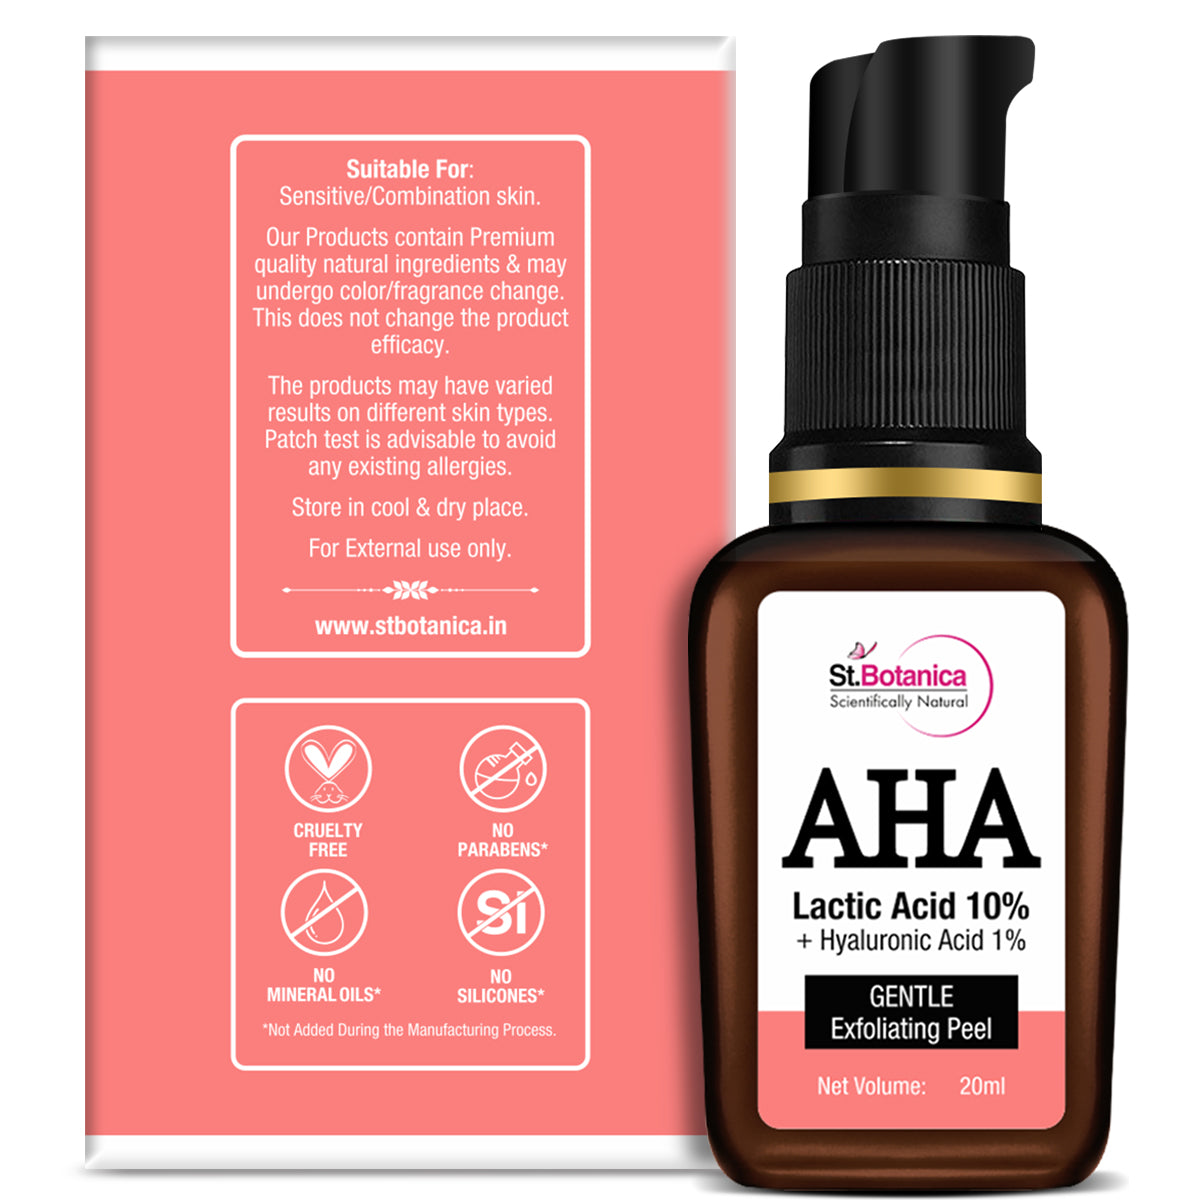 St.Botanica AHA Lactic Acid 10% & Hyaluronic Acid 1% Gentle Exfoliating Skin Peel, 20 ml